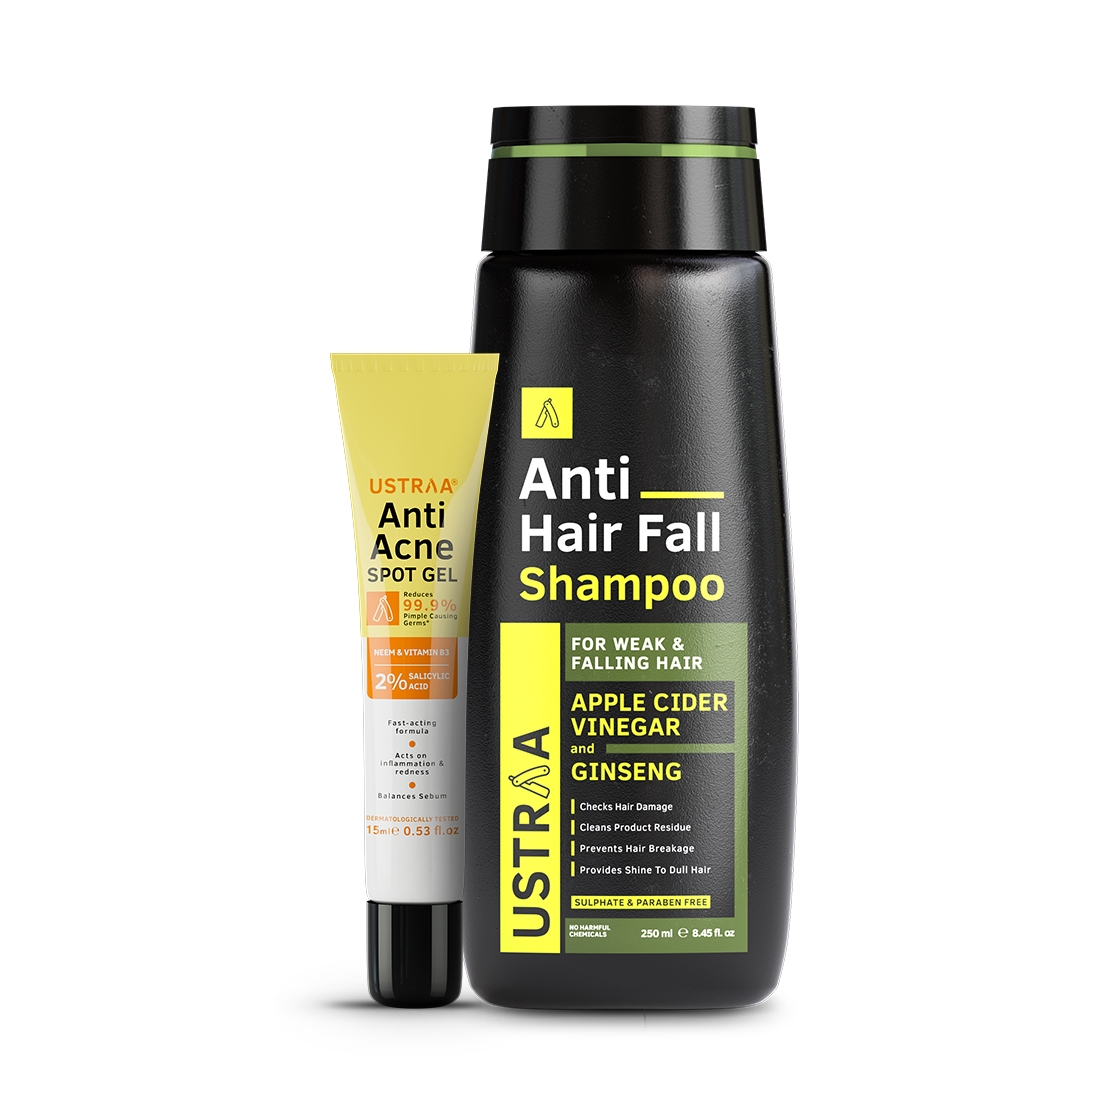 Ustraa | Ustraa Anti Acne Spot Gel - 15ml & Anti Hair Fall Shampoo - 250ml